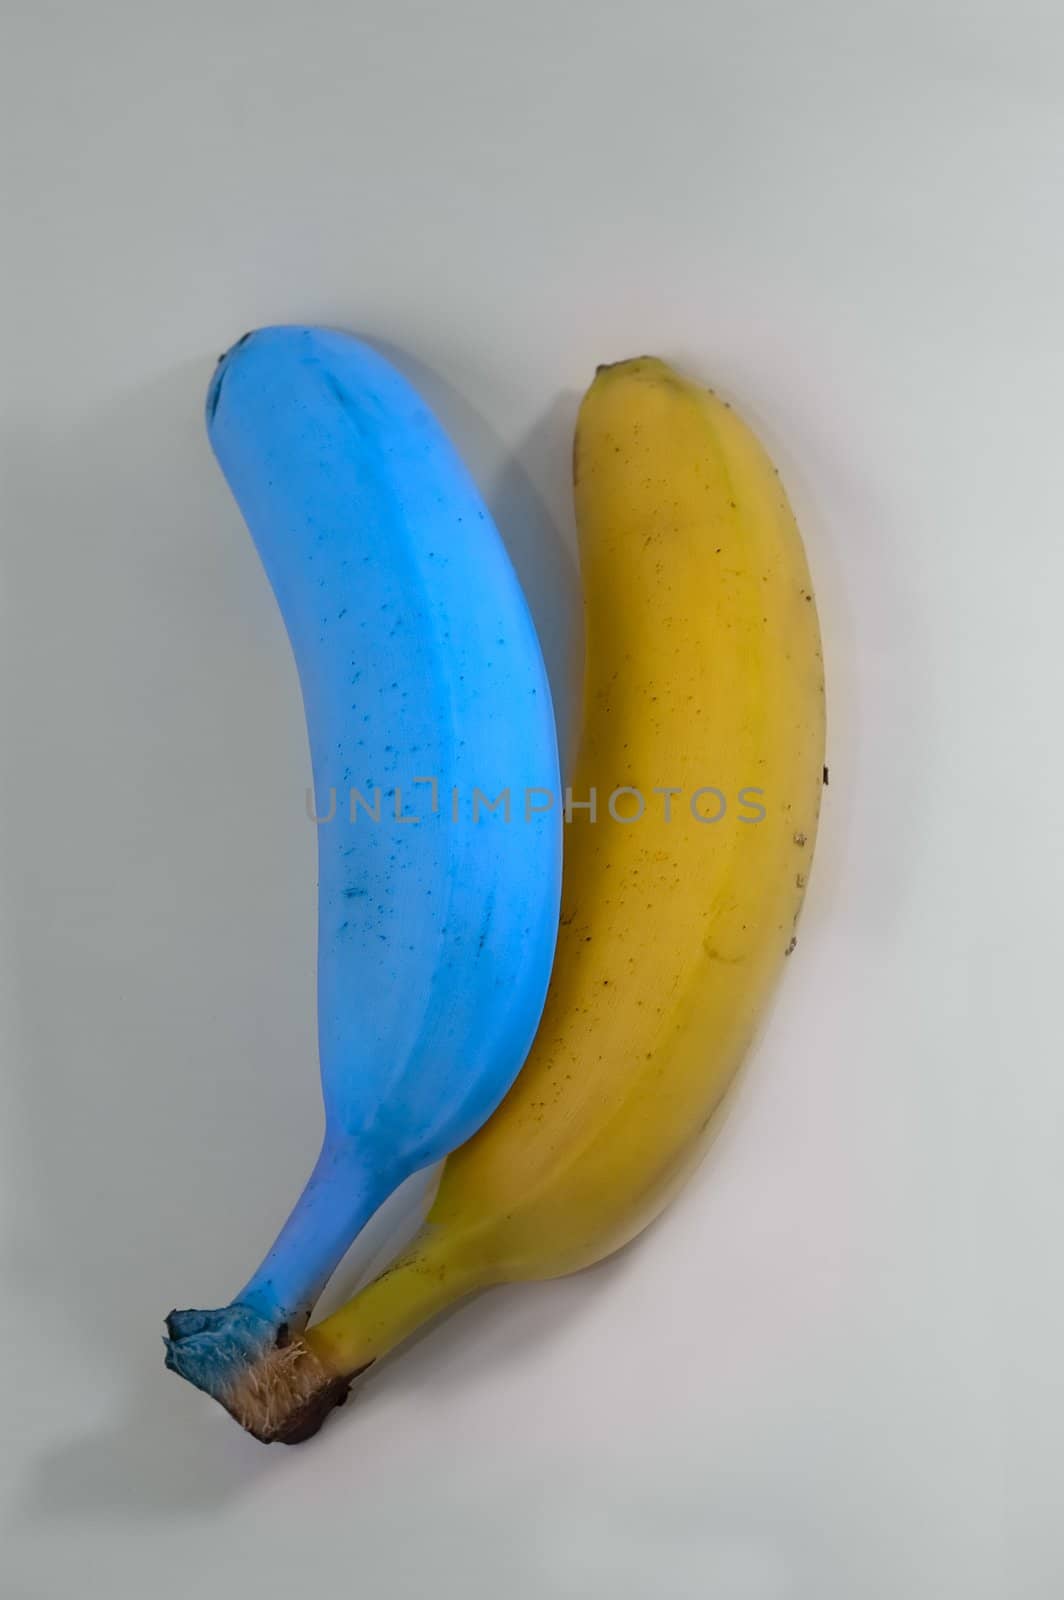 Yellow and blue banana by rusak